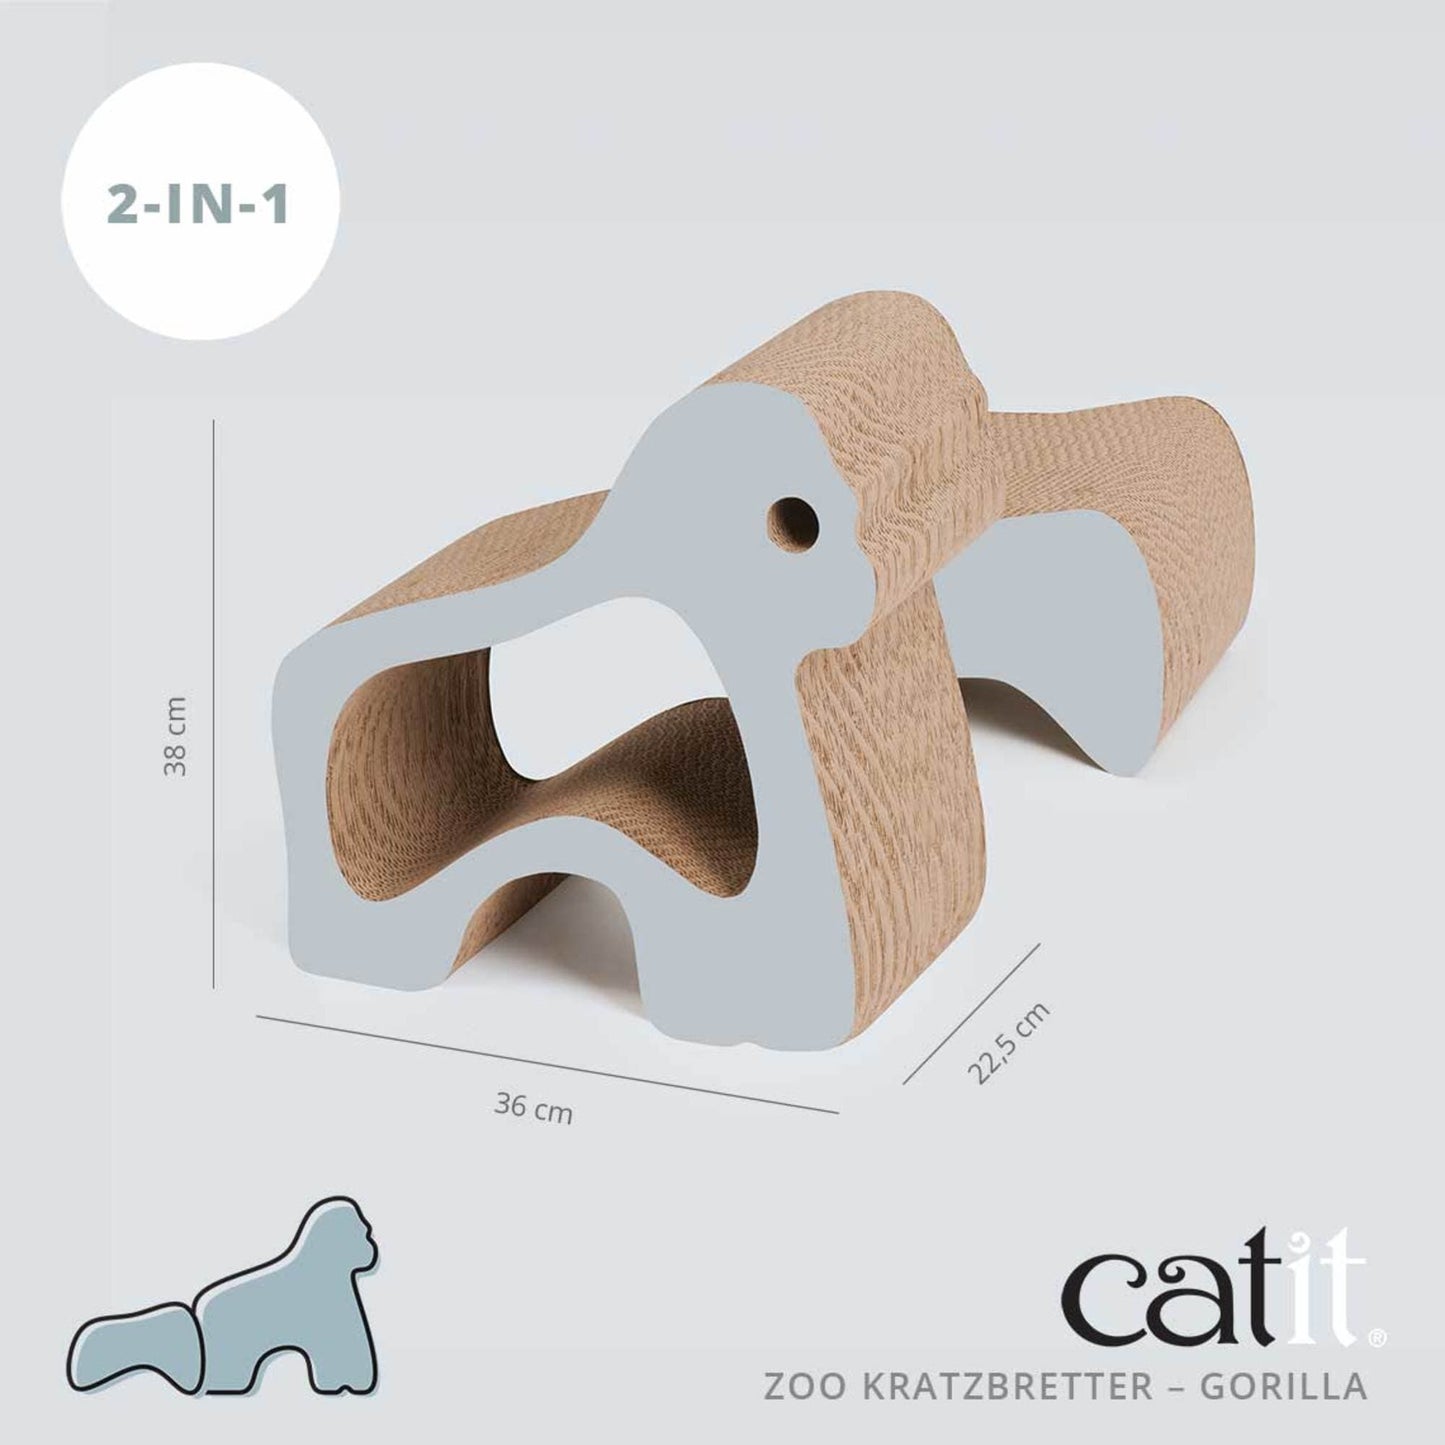 Catit Zoo Kratzbretter ─ Gorilla